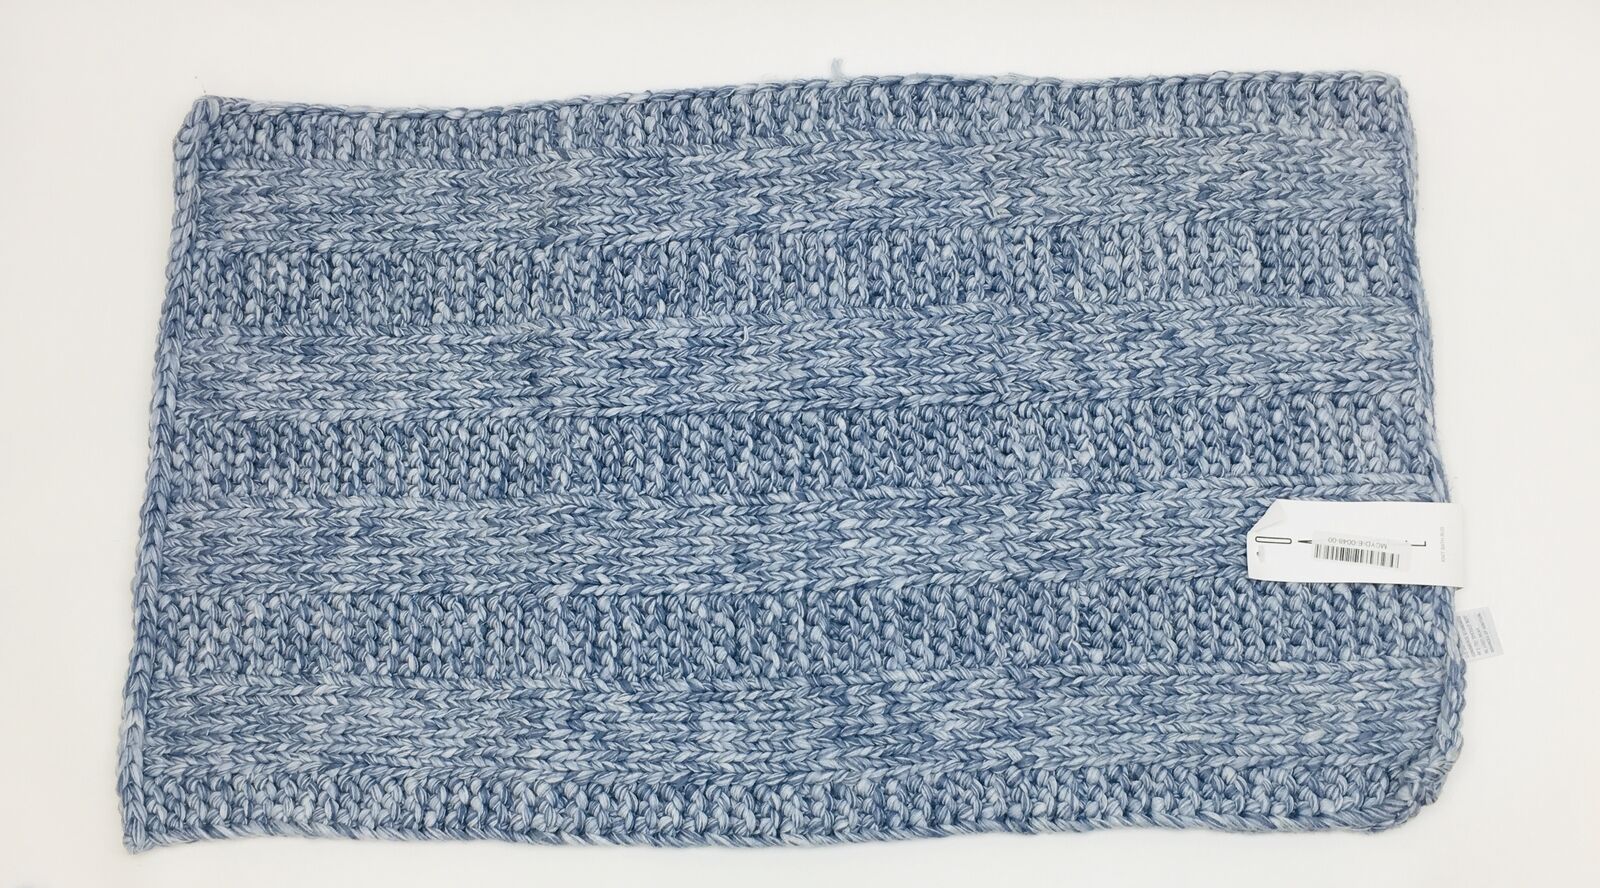 Oake 100% Turkish Cotton Knit Bath Rug, Blue 20”x 32” - New